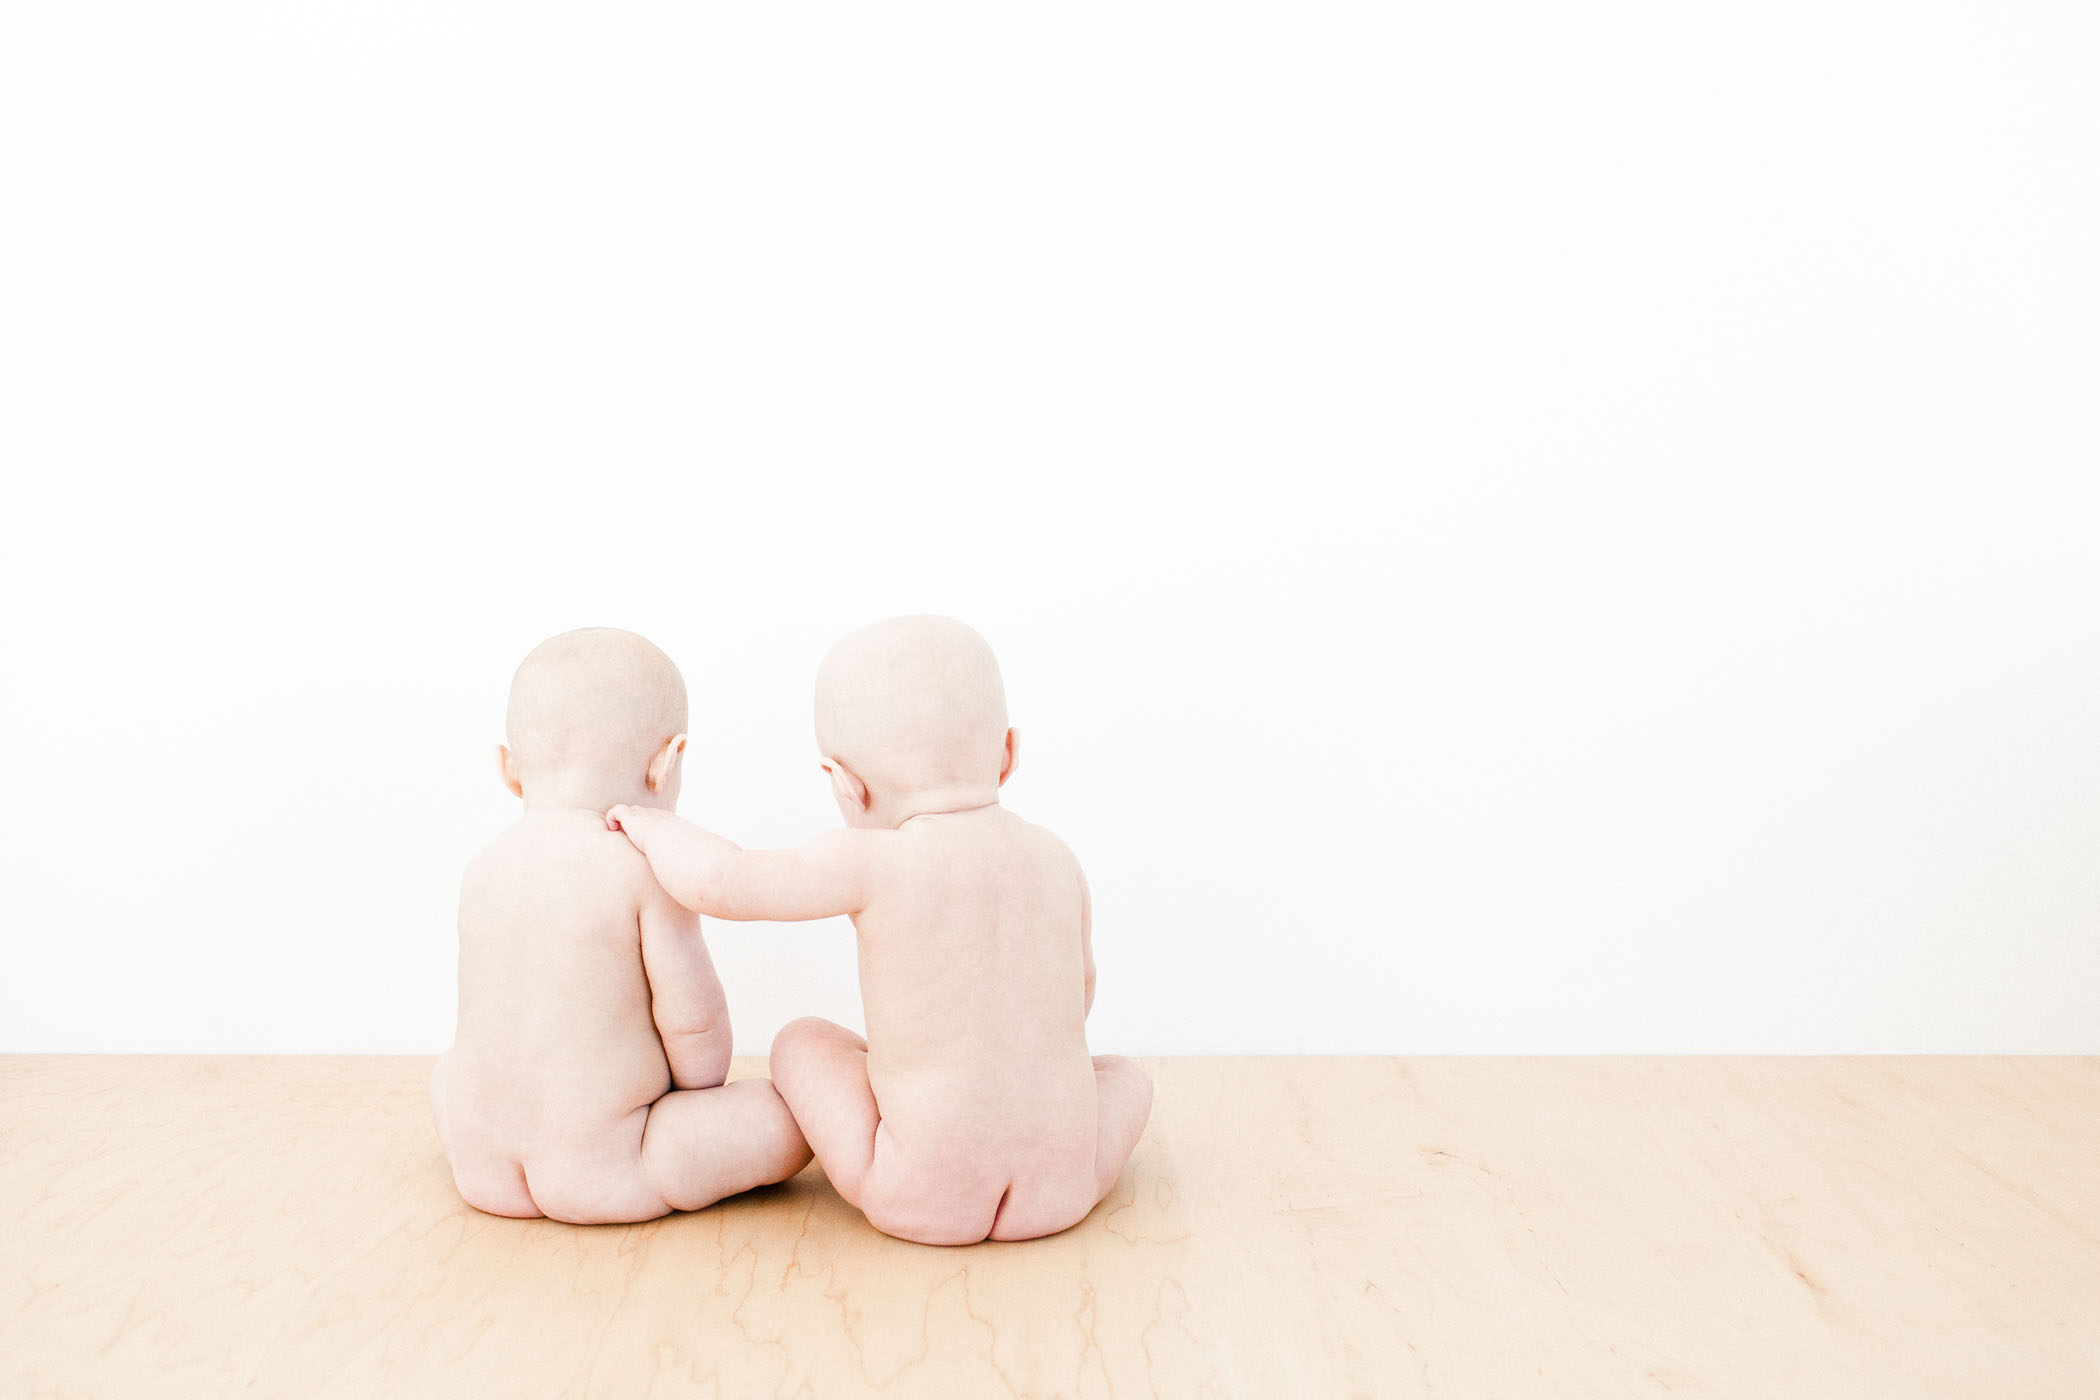 tucson-twins-baby-studio-photography_fletcher-and-co_012.jpg